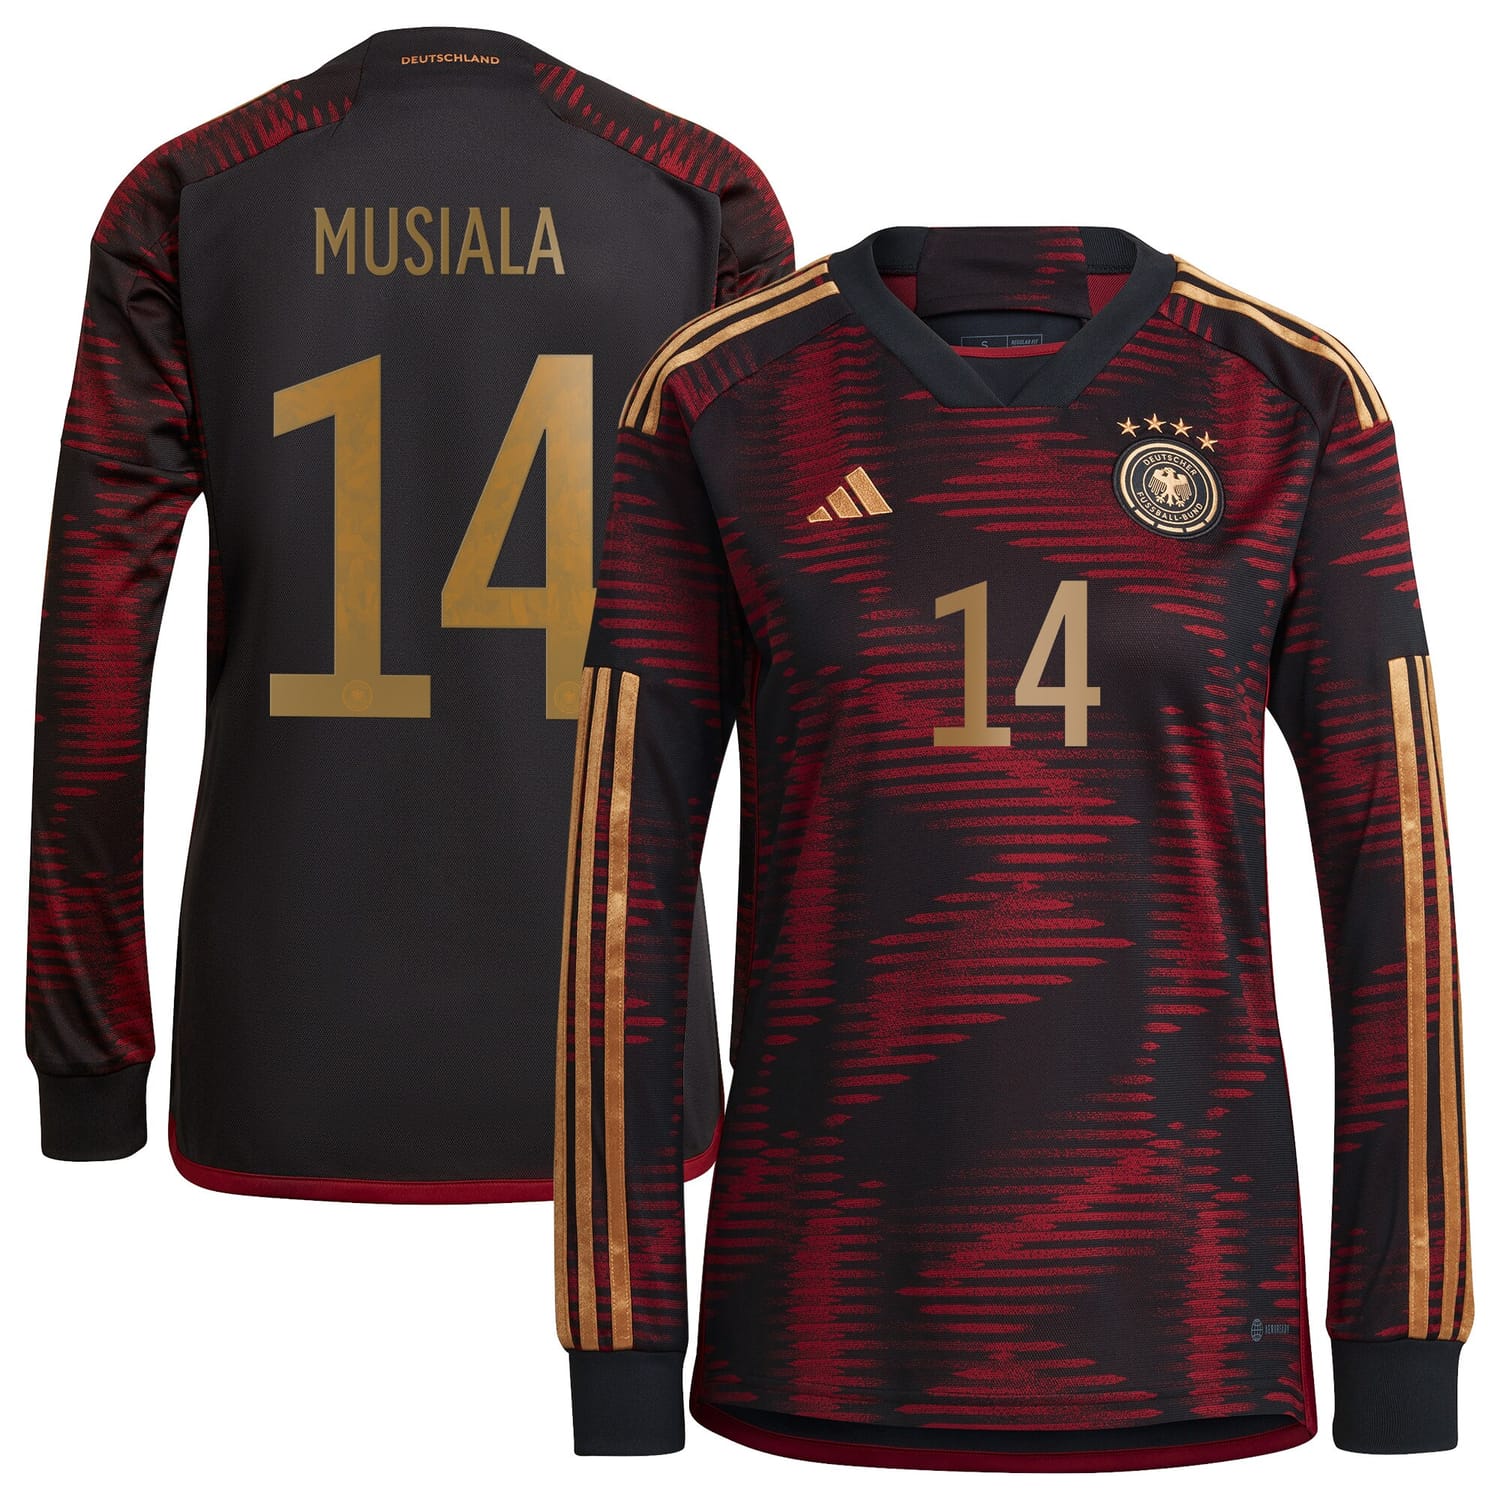 Germany National Team Away Jersey Shirt Long Sleeve player Jamal Musiala 14 printing for Women